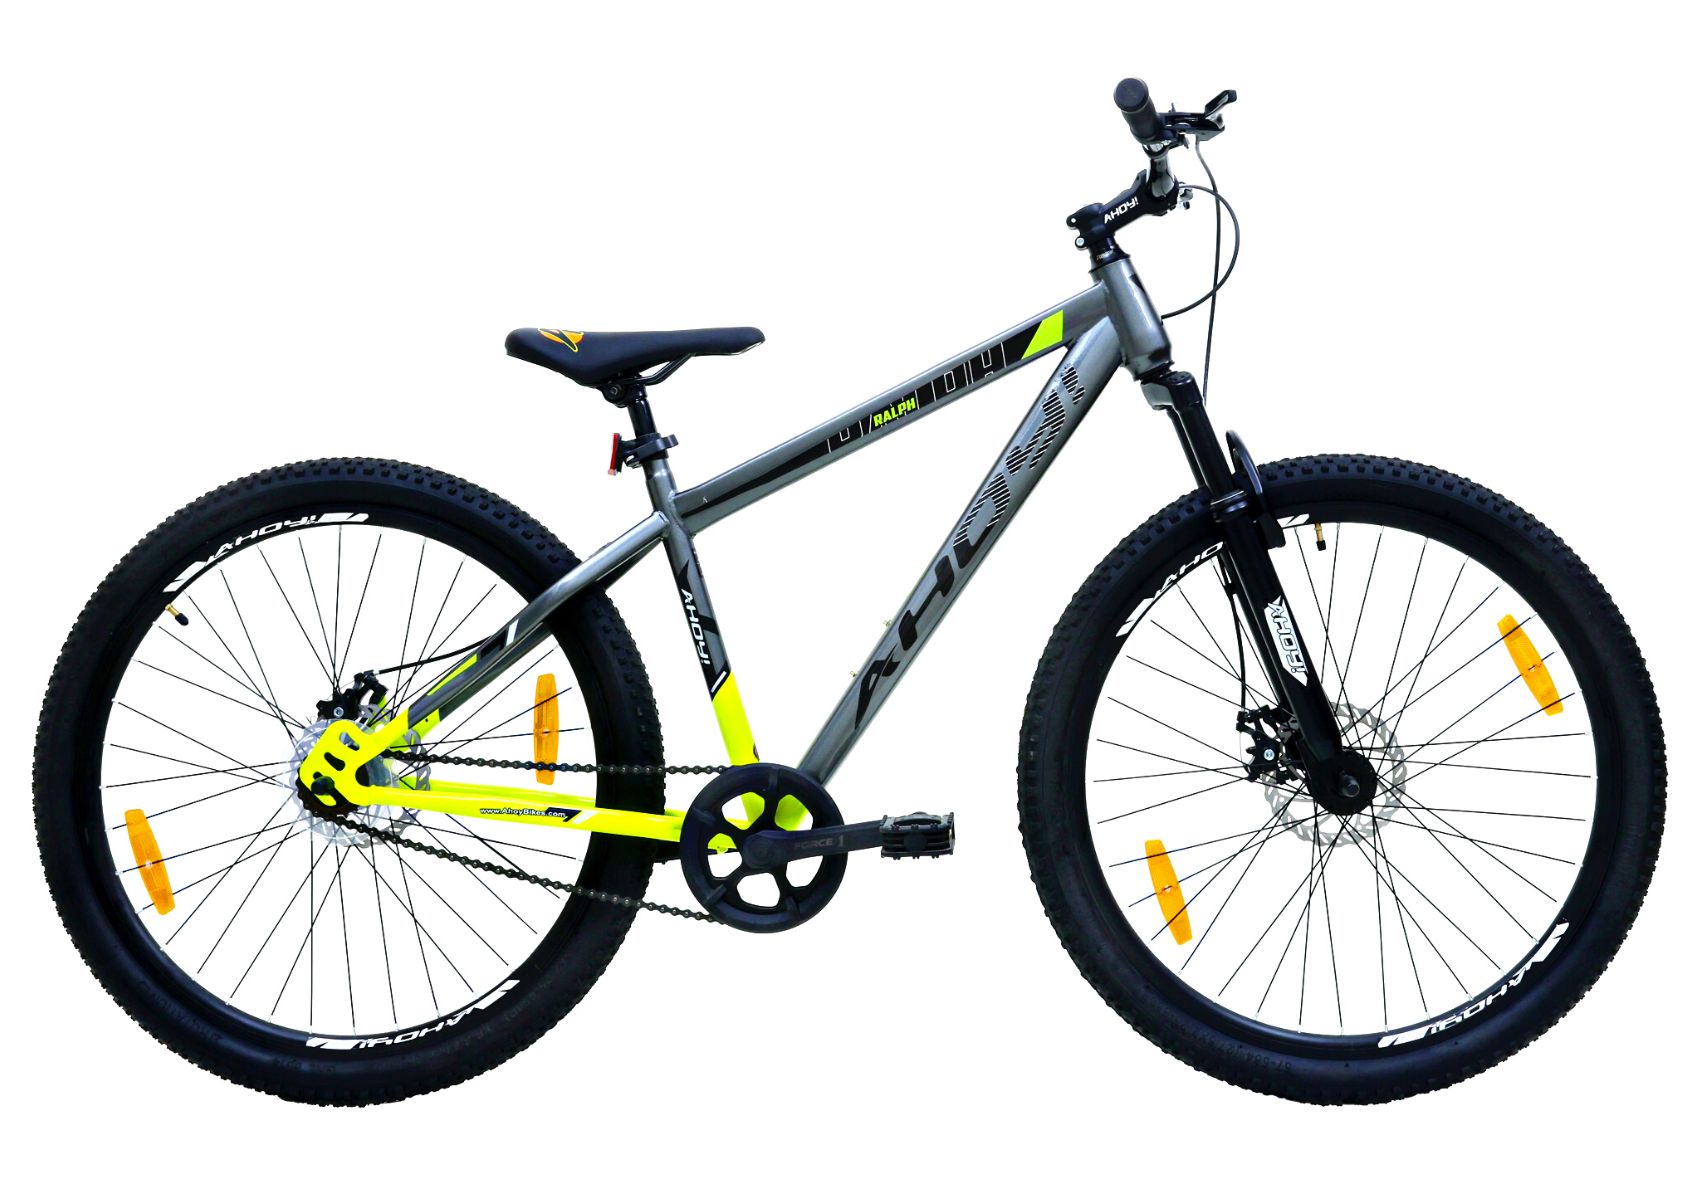 Ralph Non Gear Cycle 29T | Buy Yellow All Terrain Bike for Men